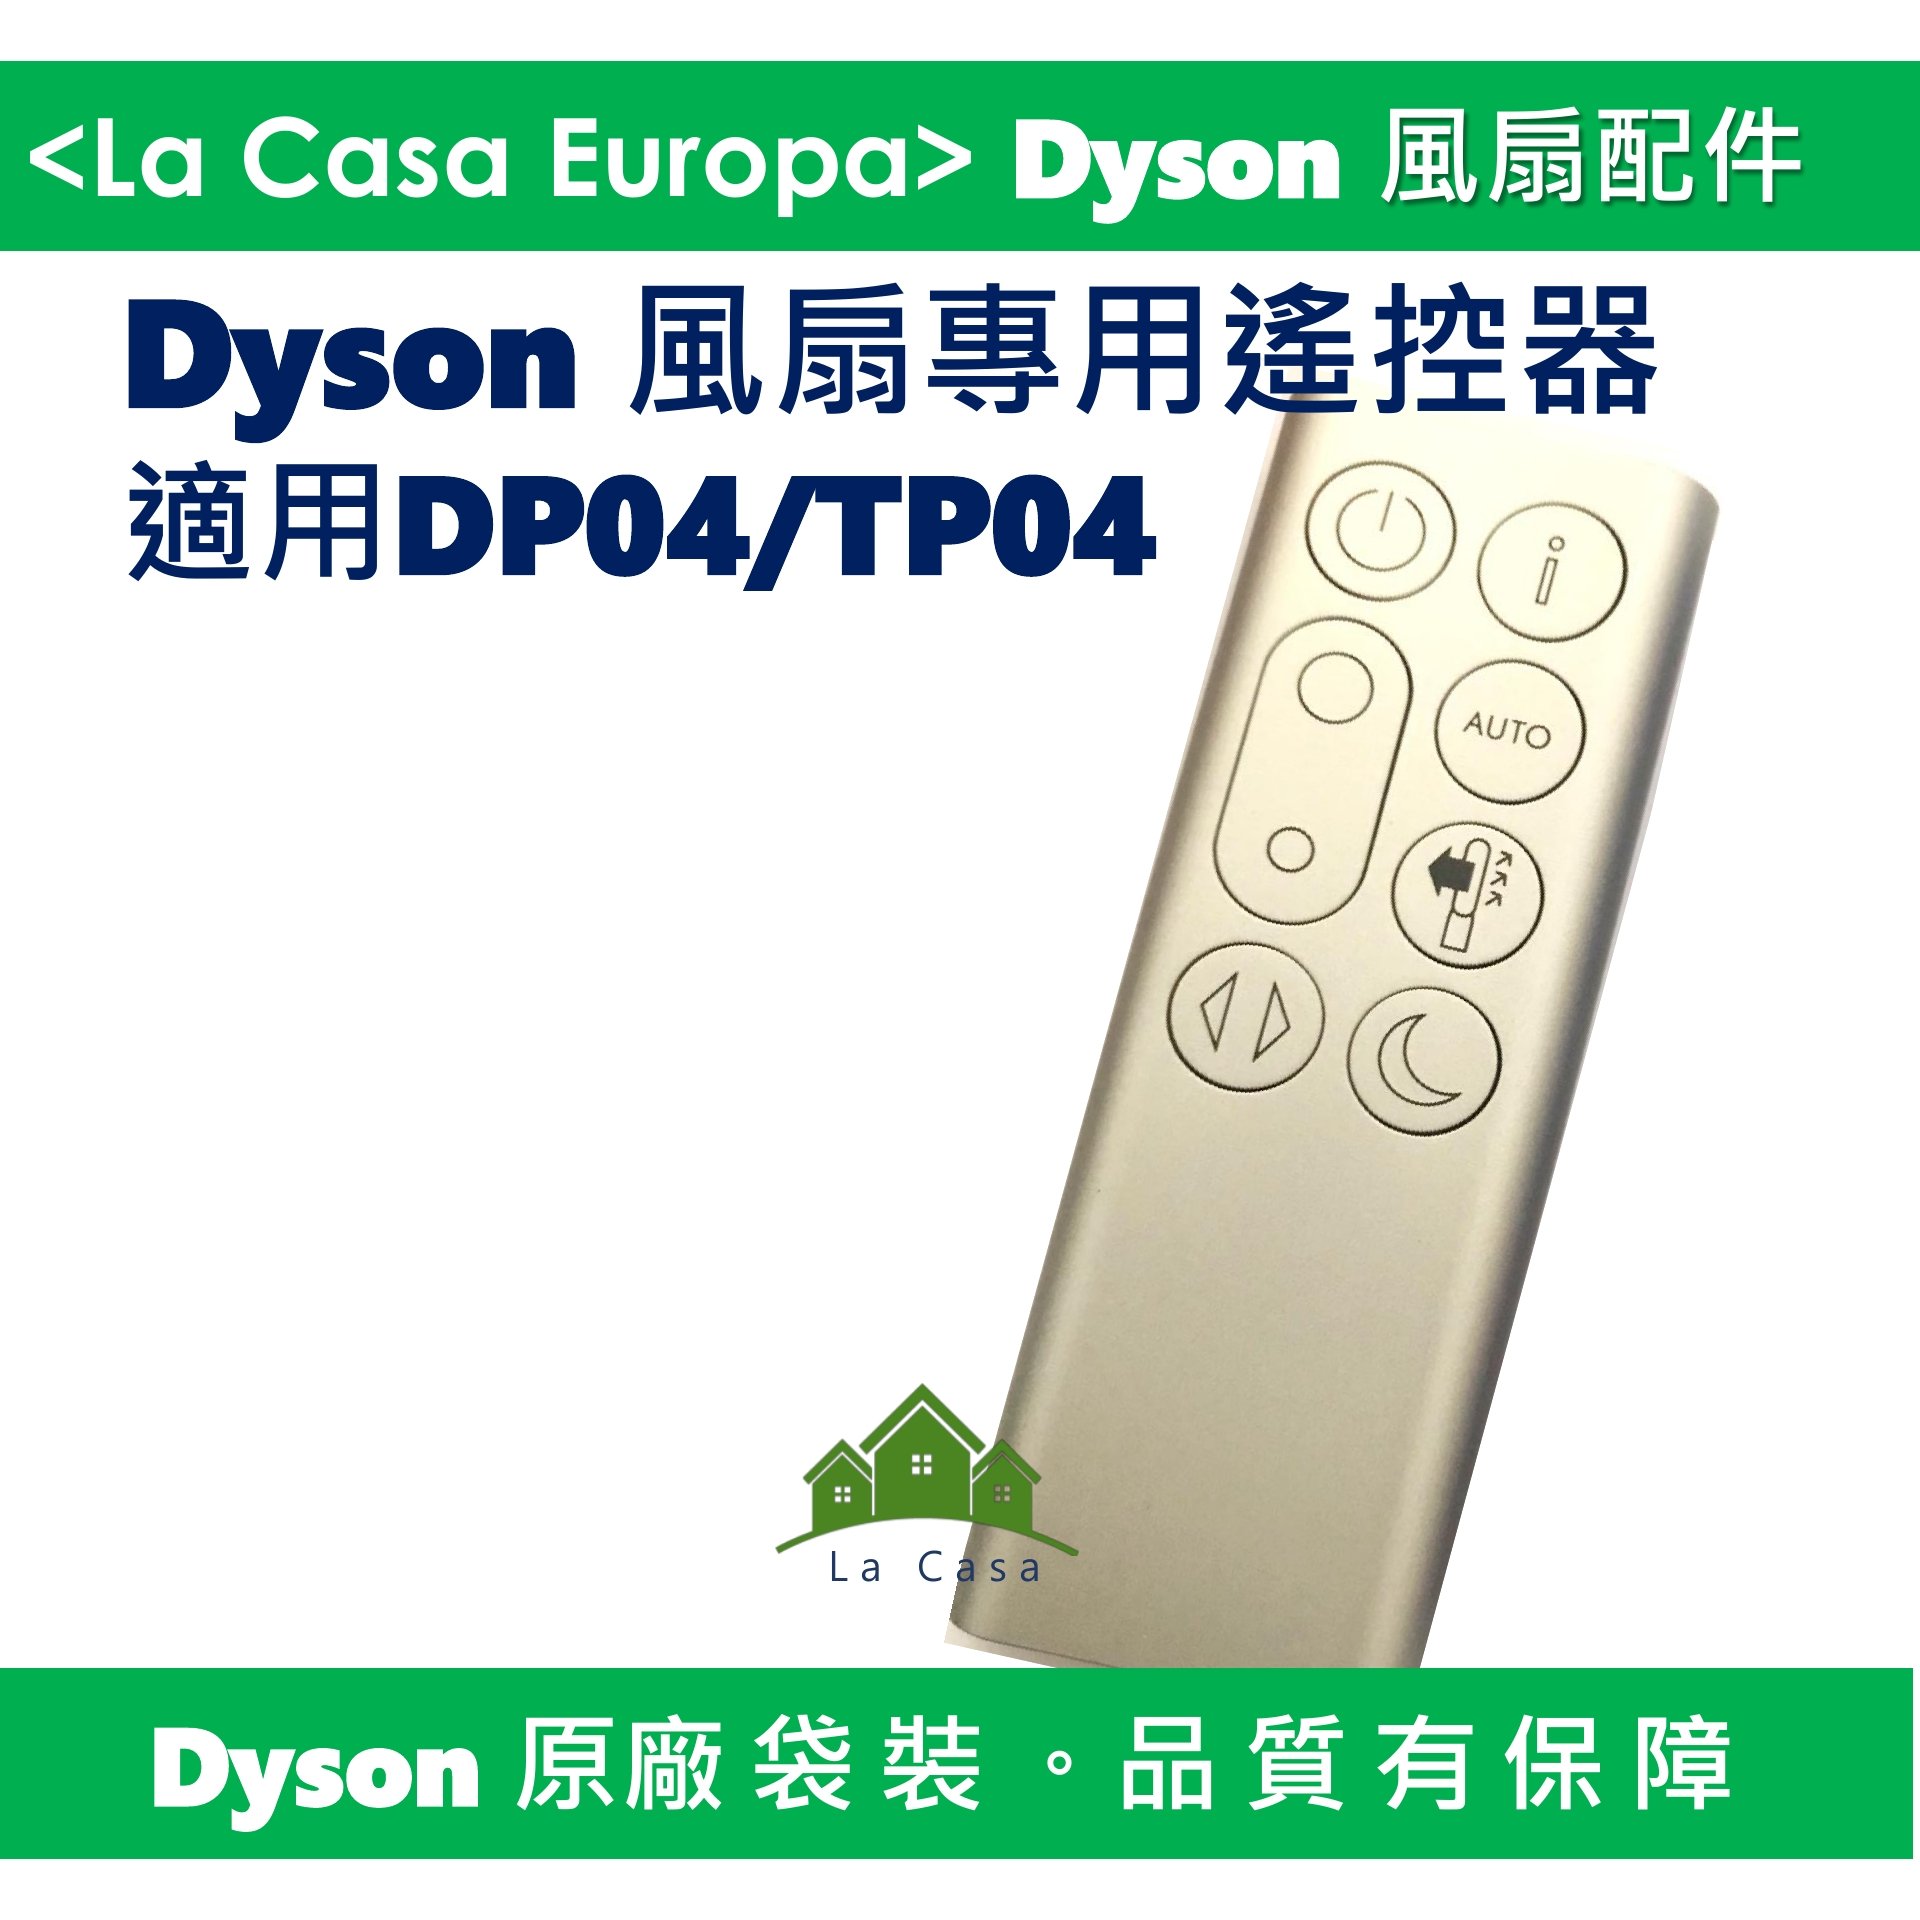 [My Dyson] 原廠DP04 TP04 遙控器，銀色。100% Dyson 全新商品，請安心購買。